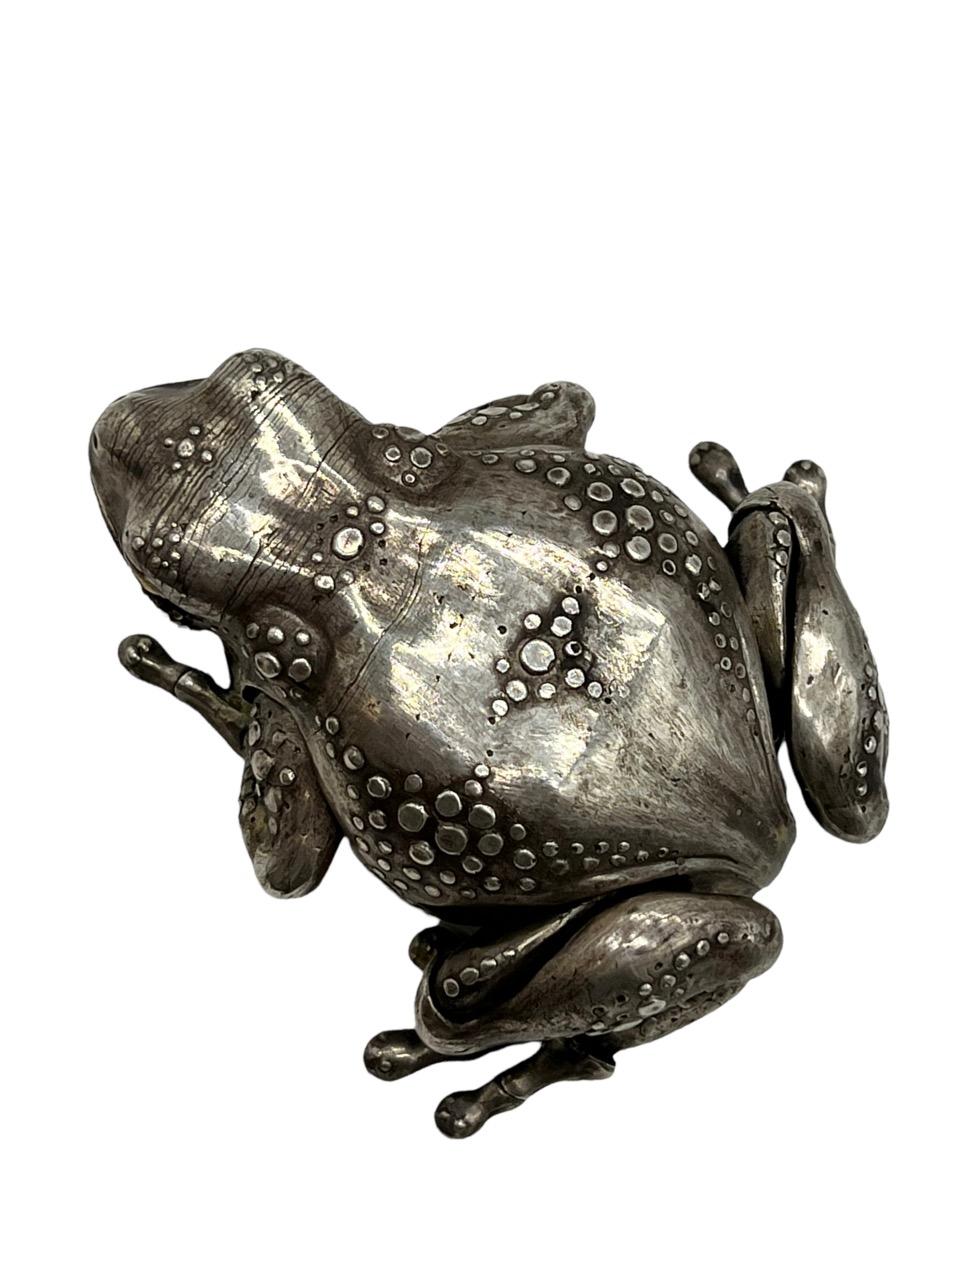 Oleg Konstantinov Fully Articulated Frog Made of Sterling Silver 6